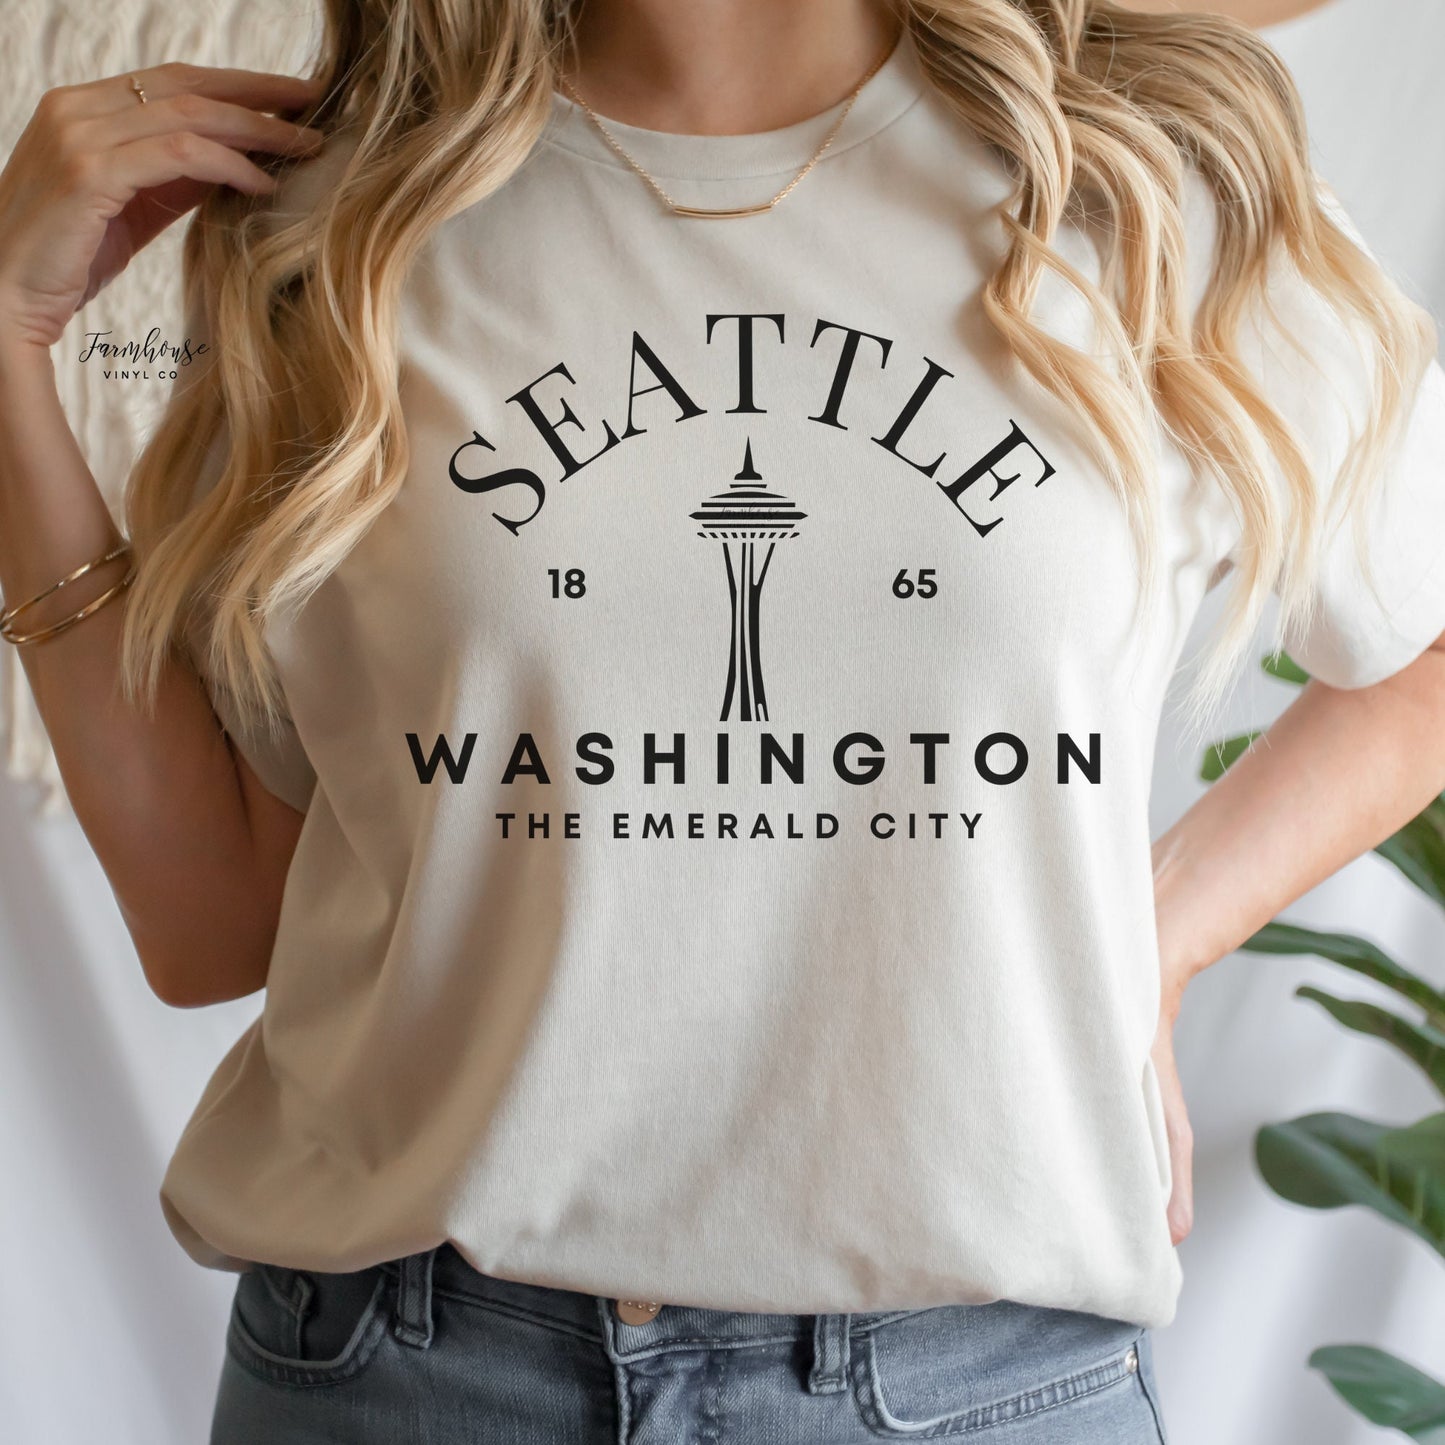 Seattle Washington City Hometown Shirt - Farmhouse Vinyl Co